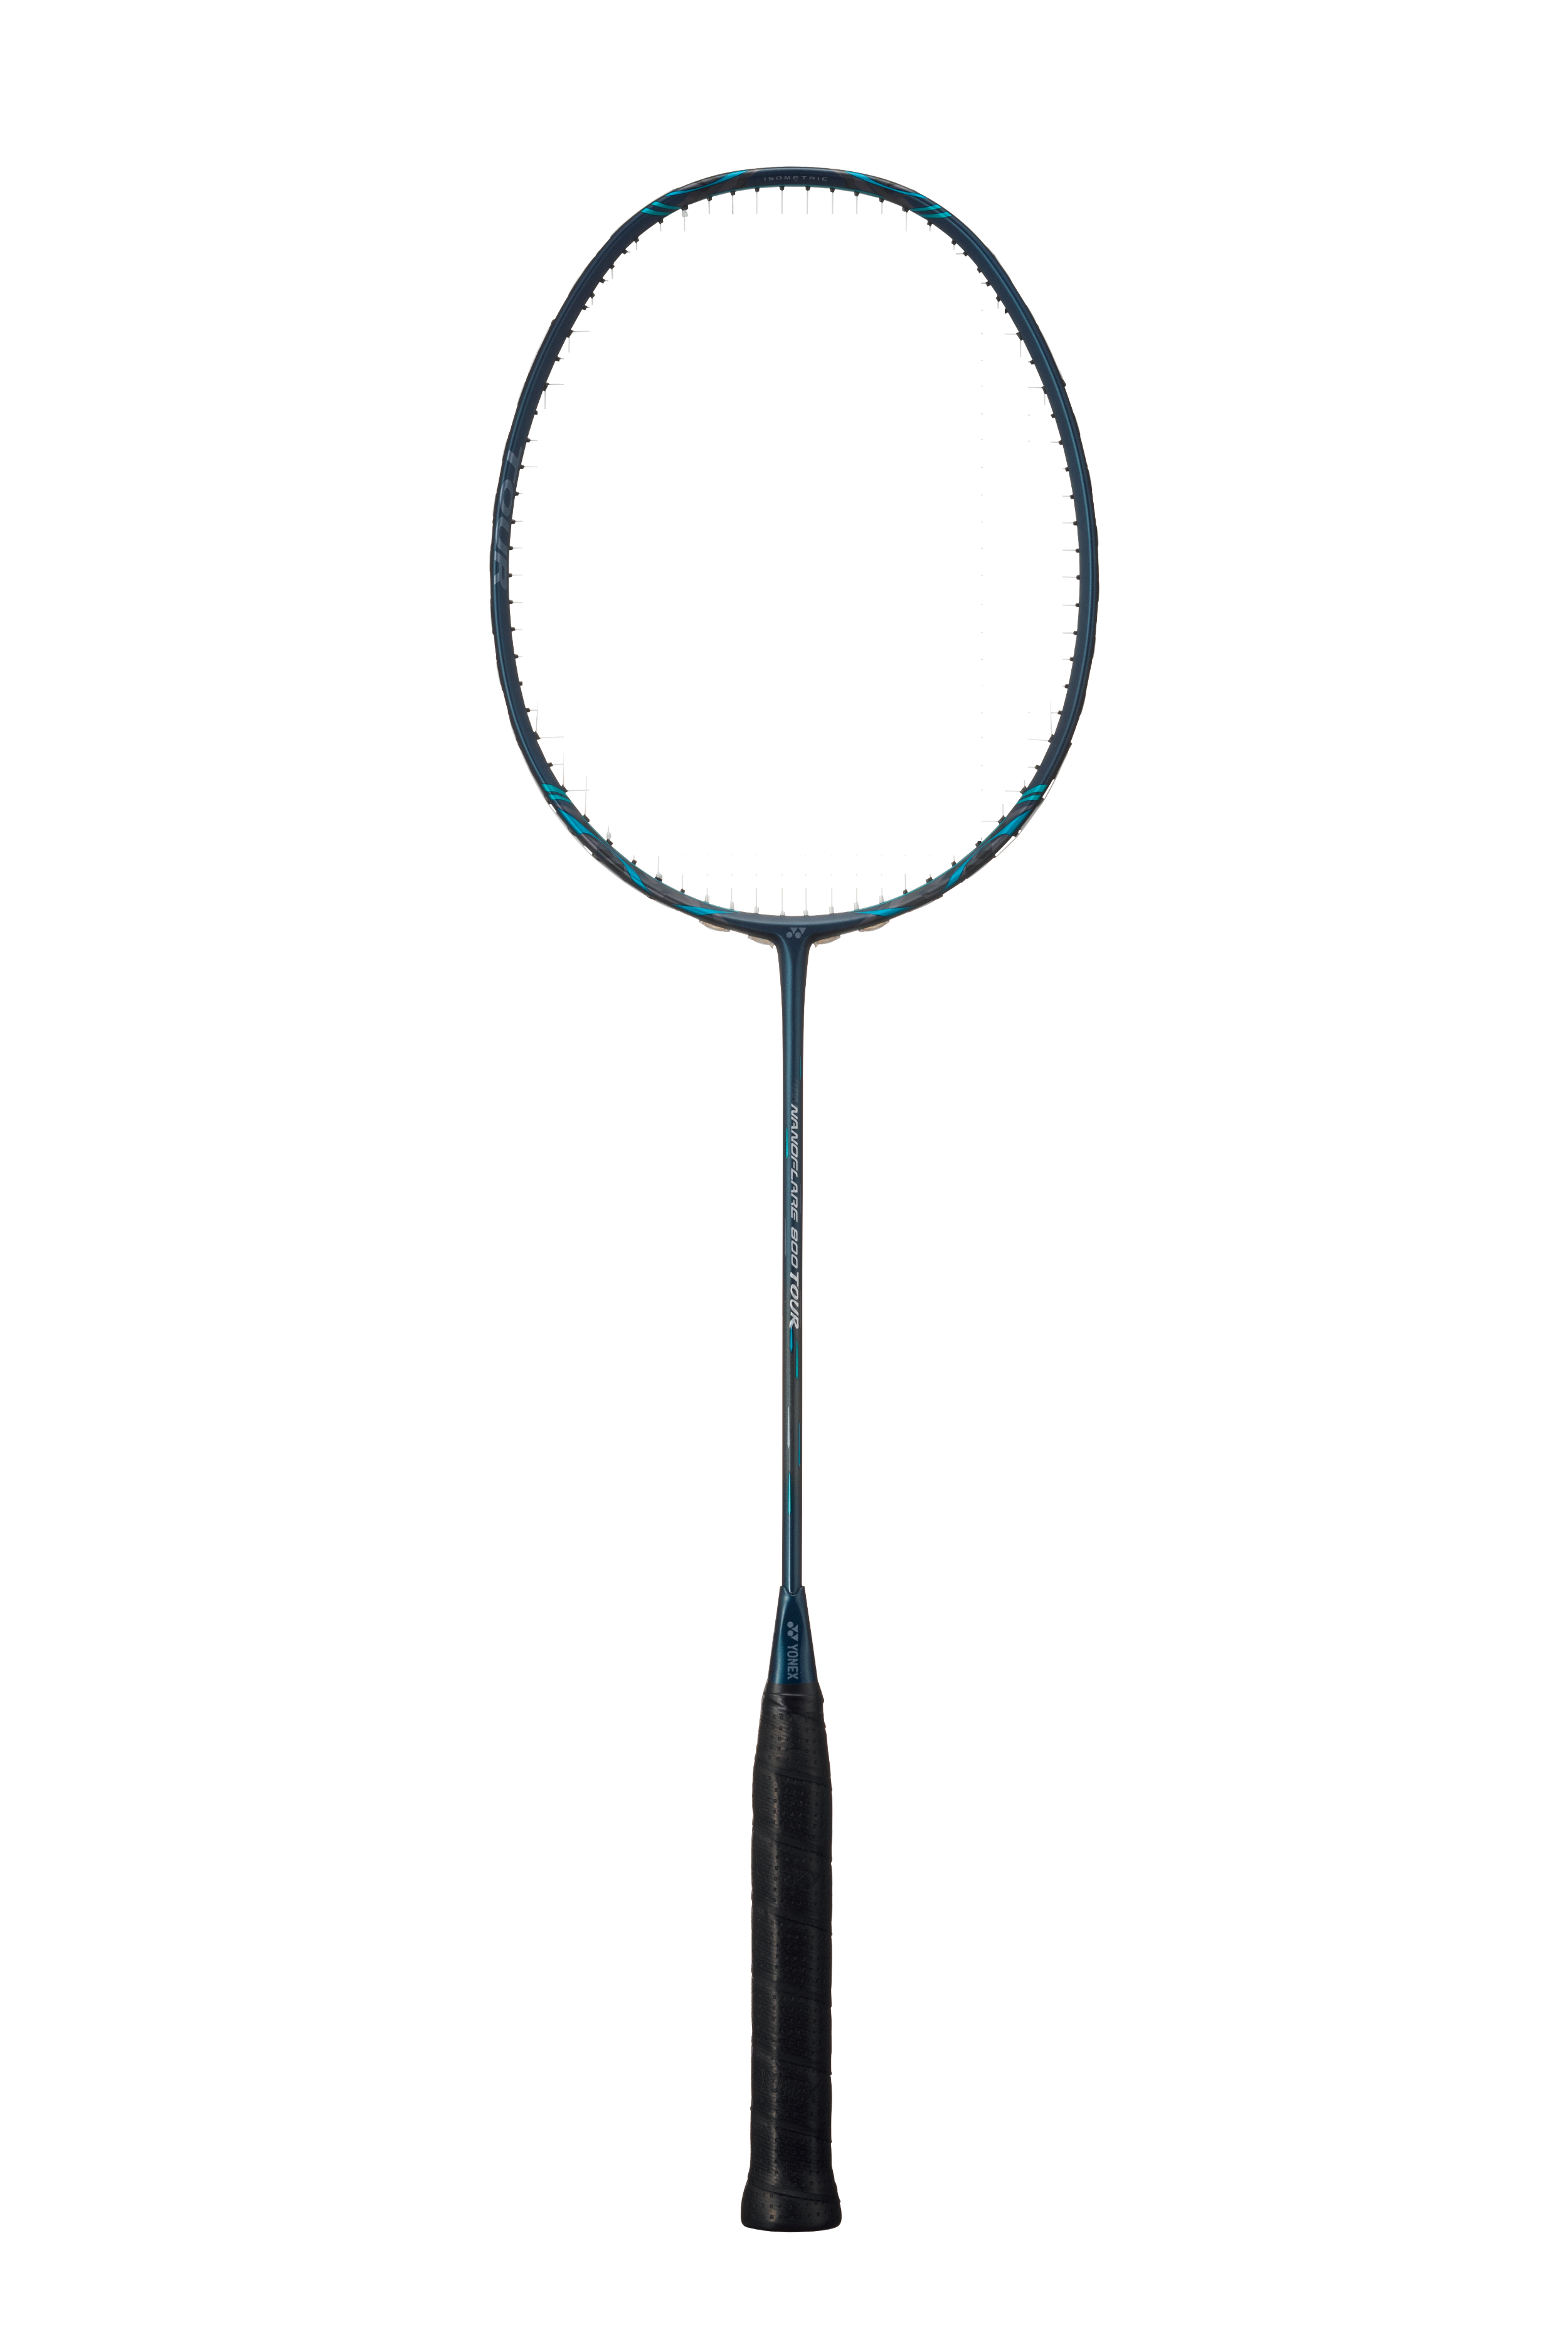 YONEX Nanoflare 800 Tour Badminton Racket - NF800T - Deep Green - Frame only